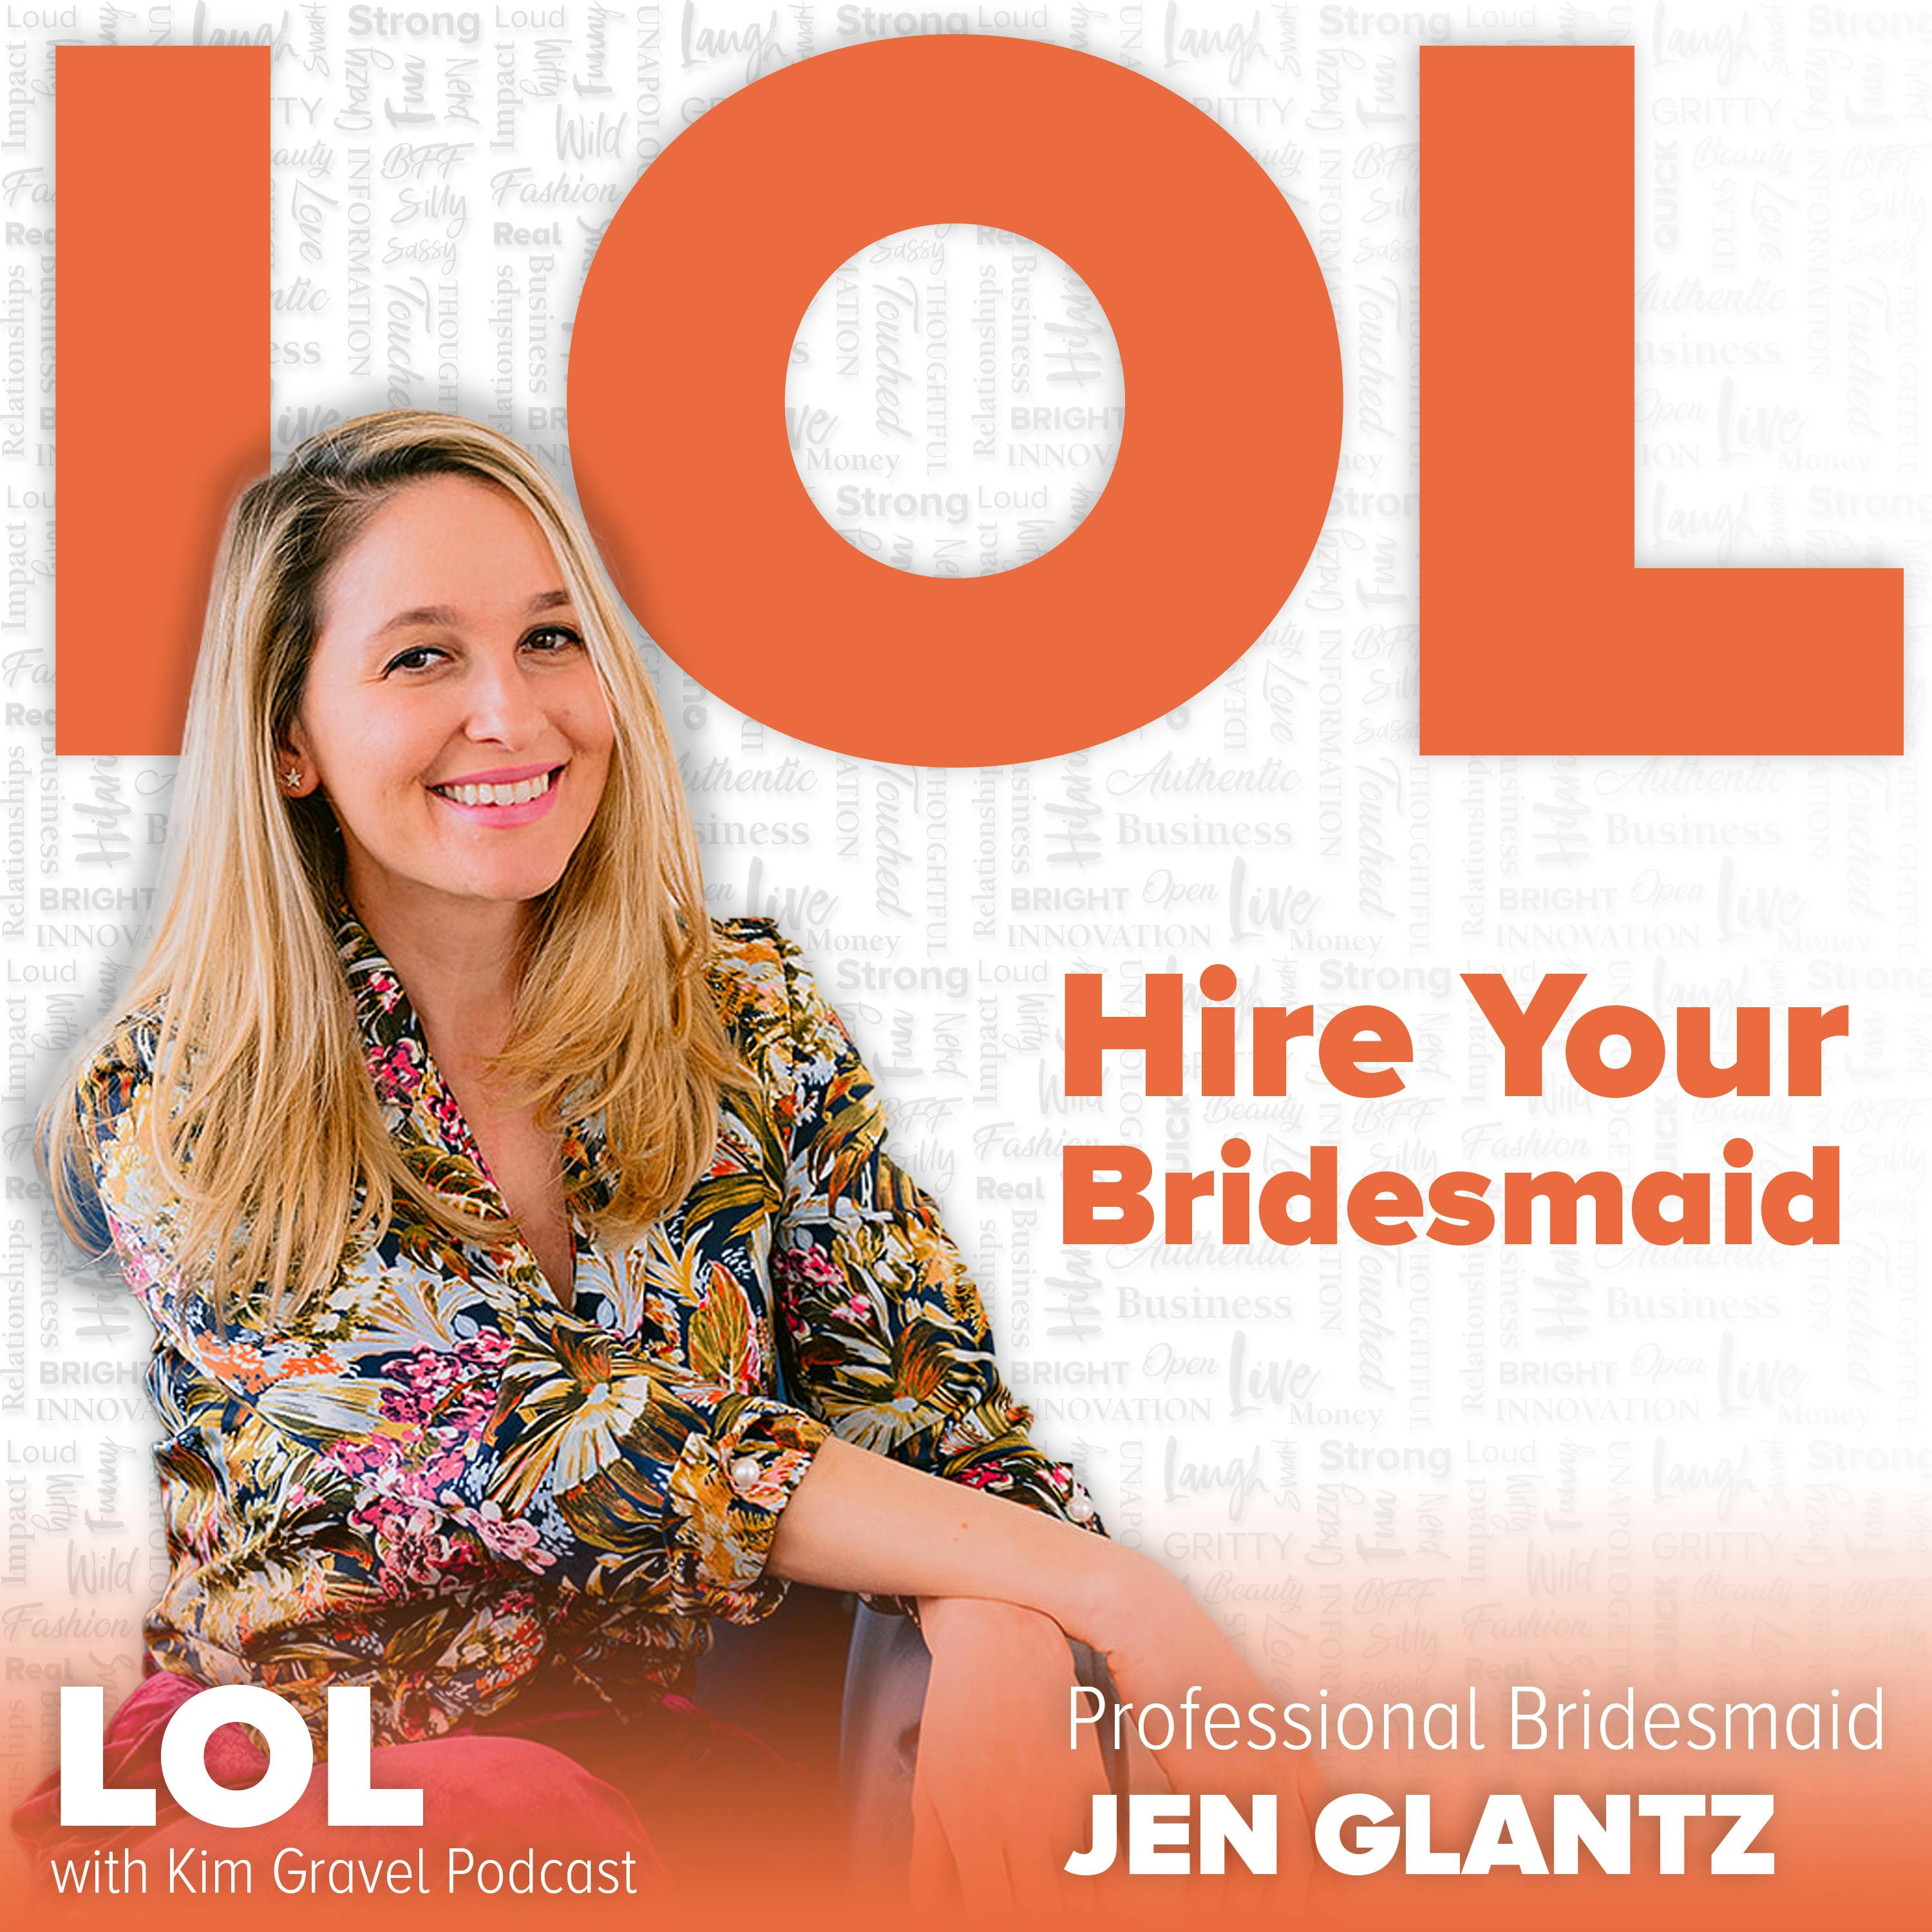 Hire Your Bridesmaid with Professional Bridesmaid Jen Glantz Image